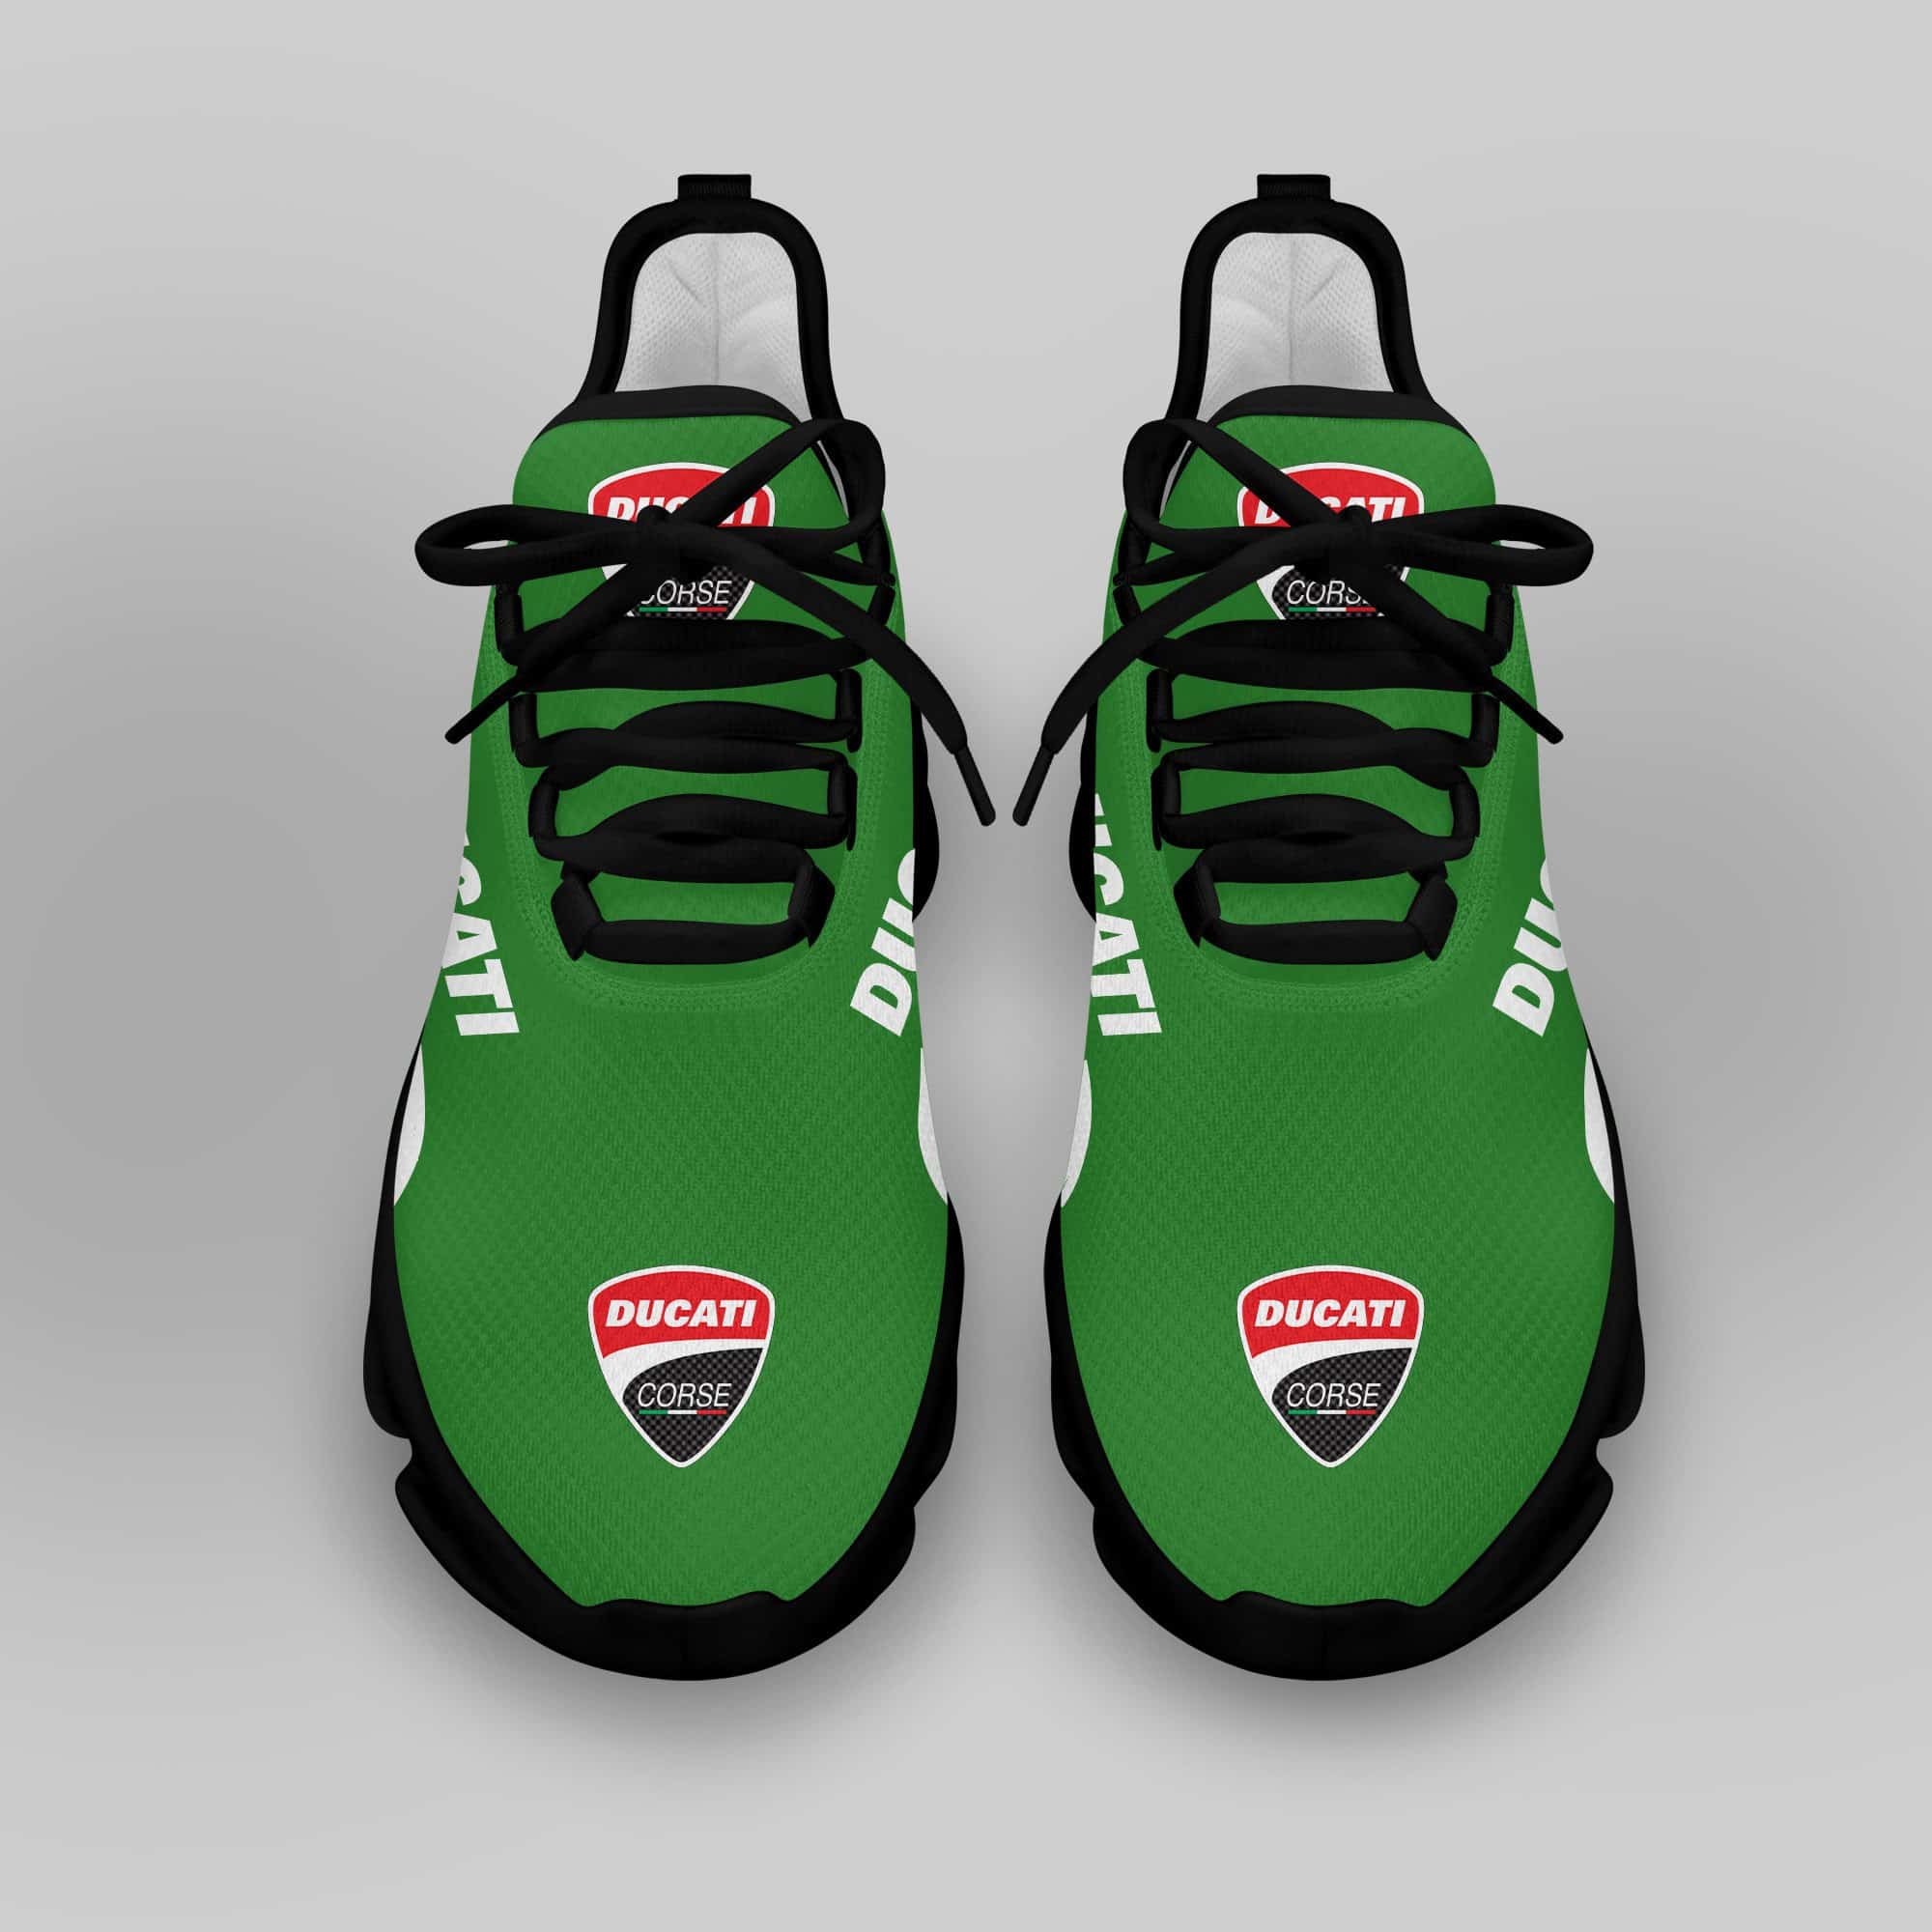 Ducati Racing Running Shoes Max Soul Shoes Sneakers Ver 65 4